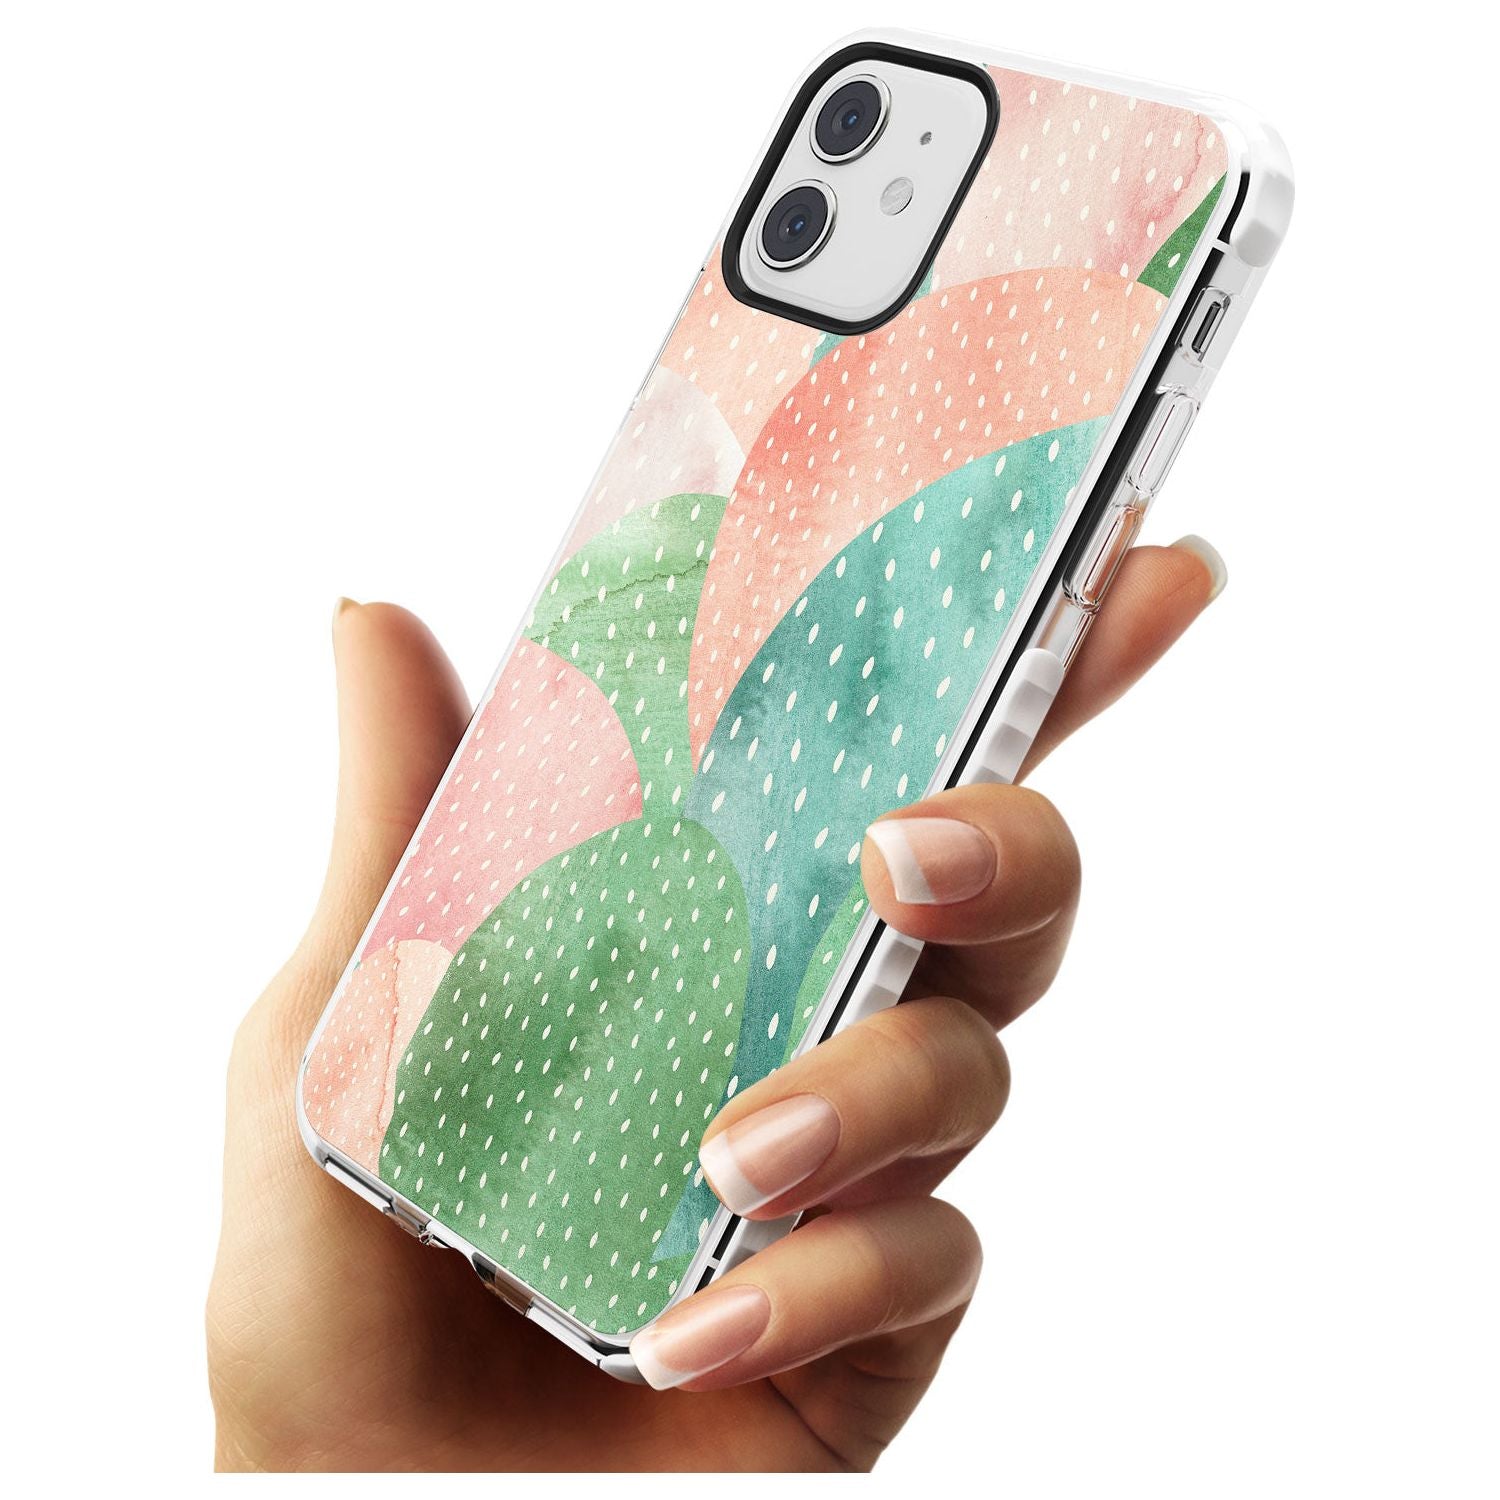 Colourful Close-Up Cacti Design Impact Phone Case for iPhone 11